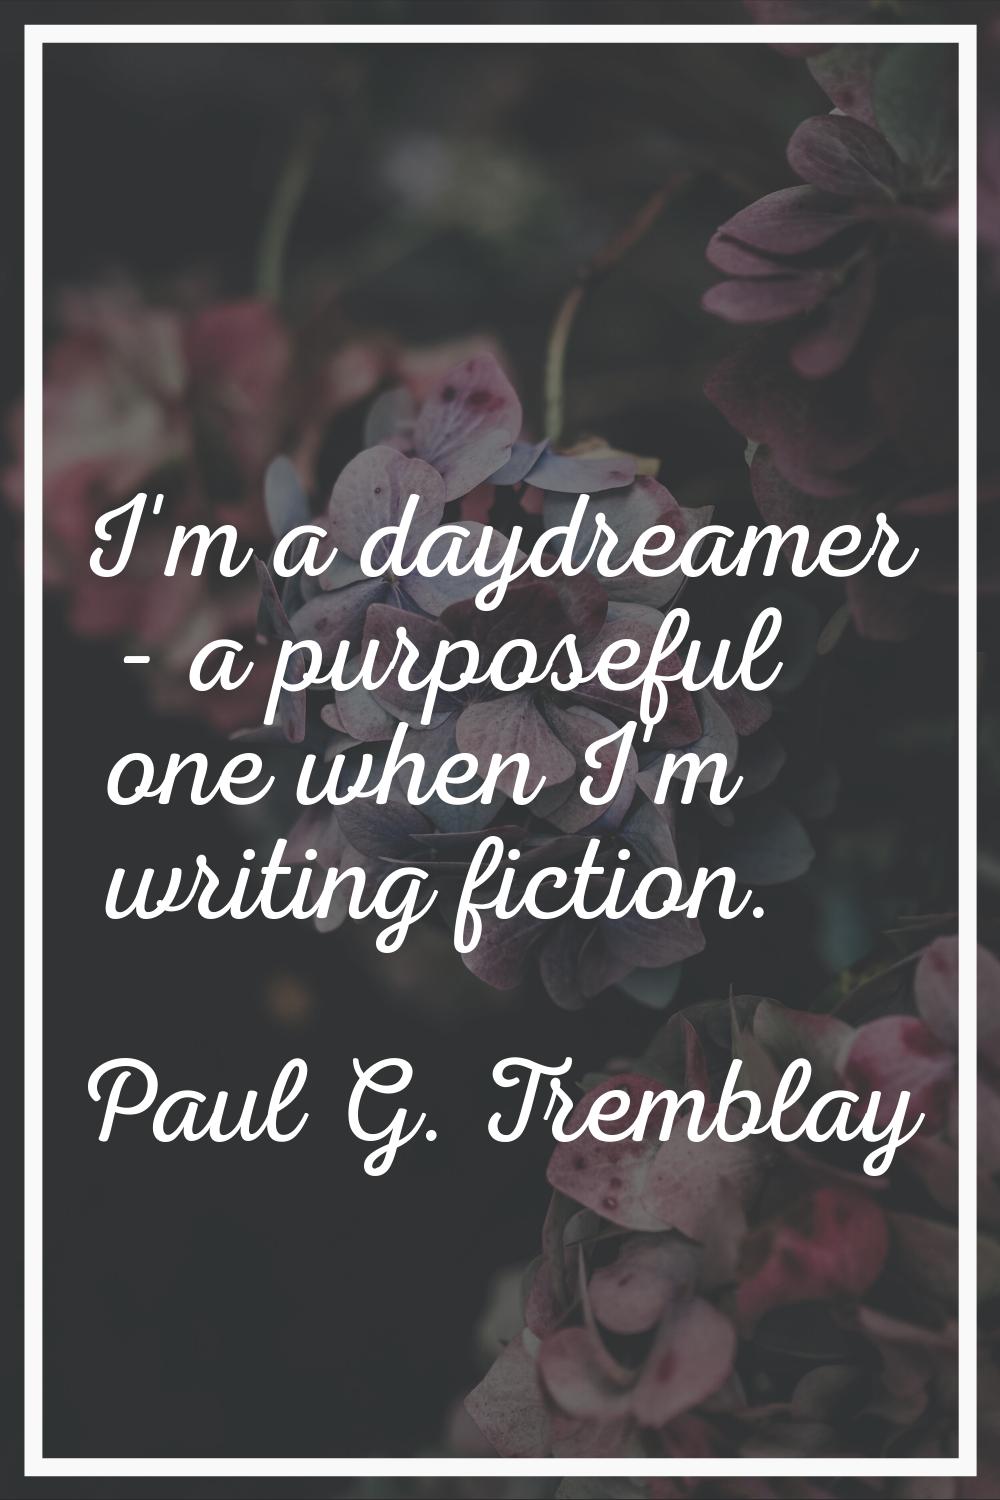 I'm a daydreamer - a purposeful one when I'm writing fiction.